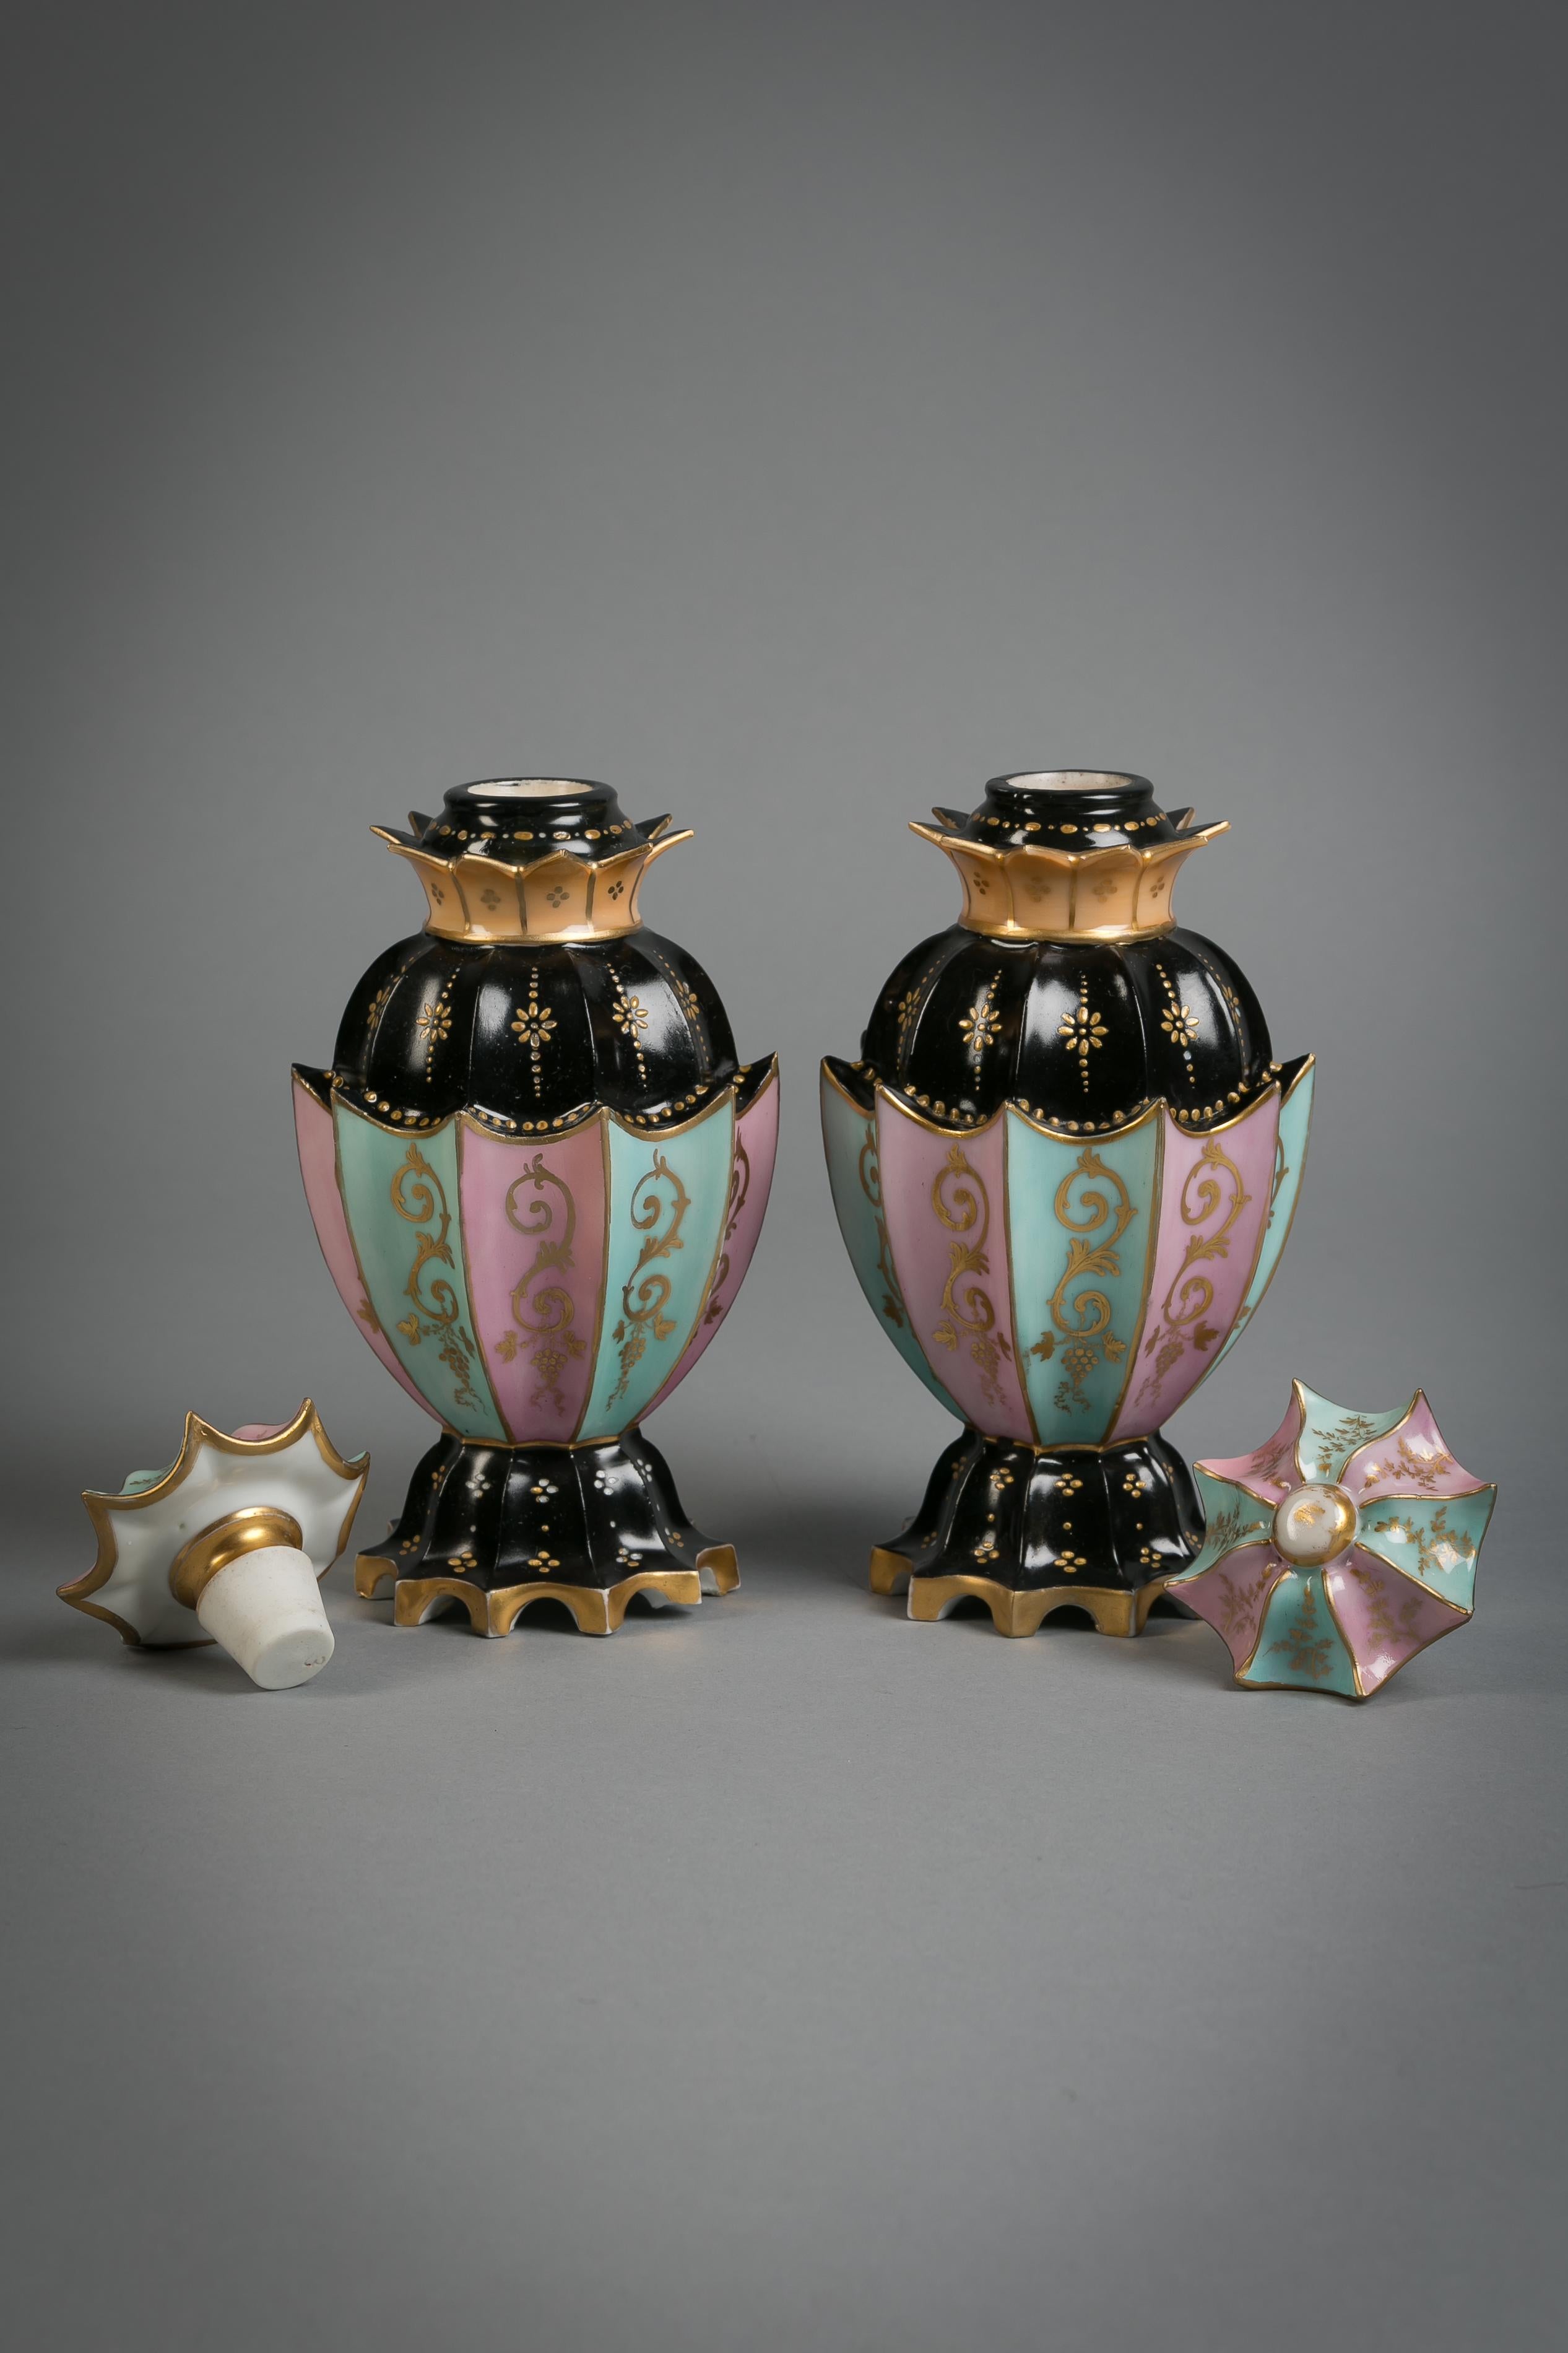 Pair of French porcelain perfume bottles, Jacob Petit, circa 1850.